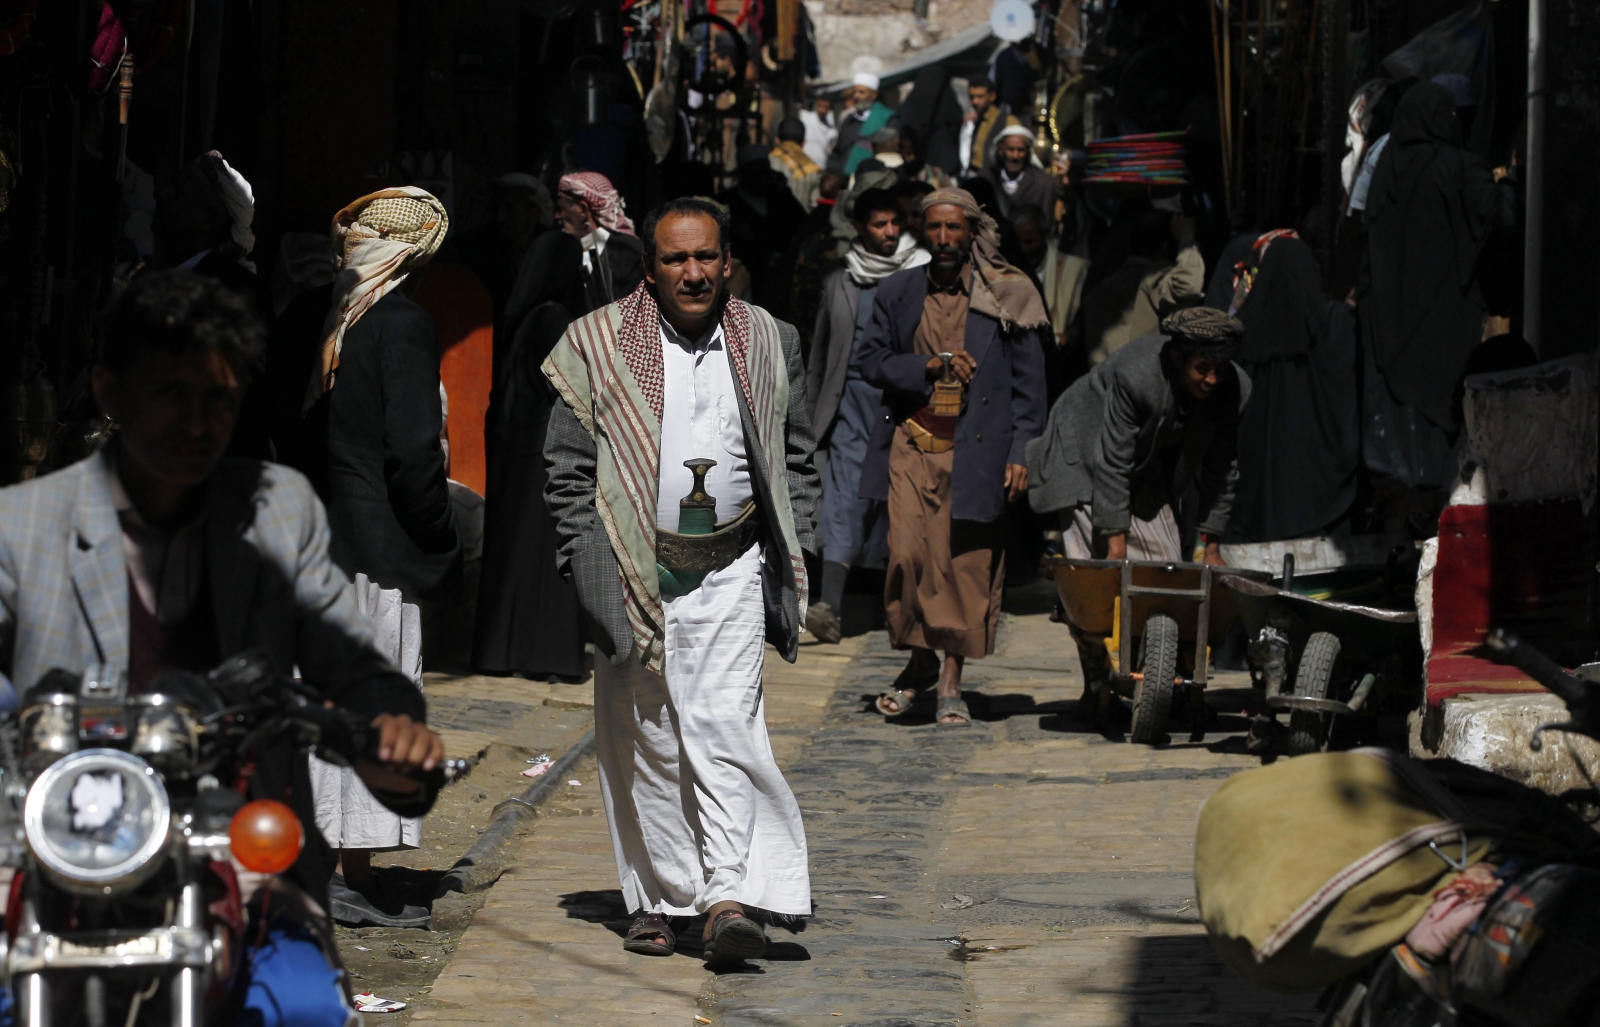 Jemen, lokalny rynek.
fot. EPA/YAHYA ARHAB